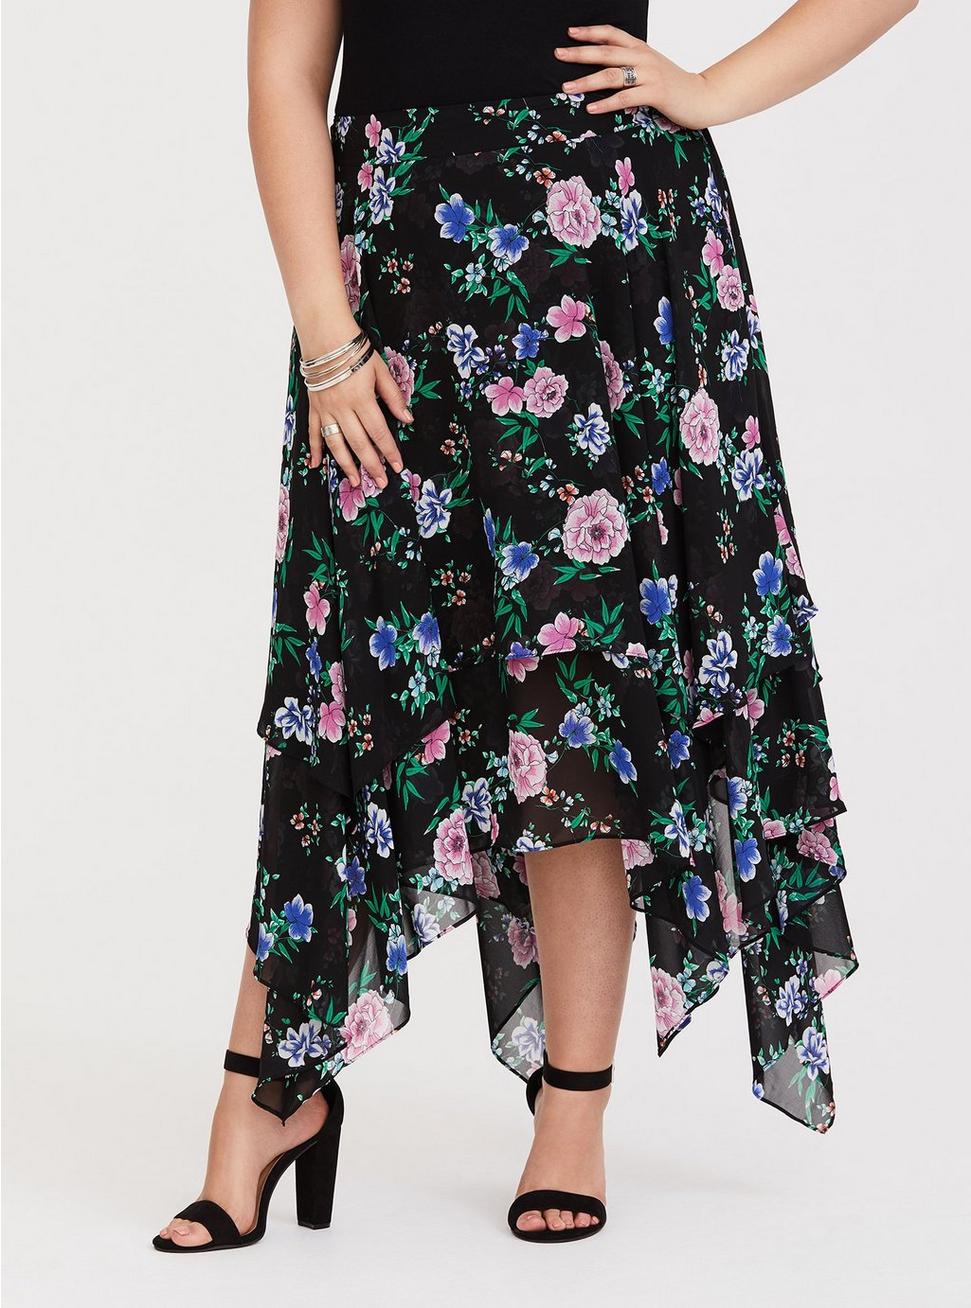 Plus Size - Black Floral Handkerchief Chiffon Skirt - Torrid